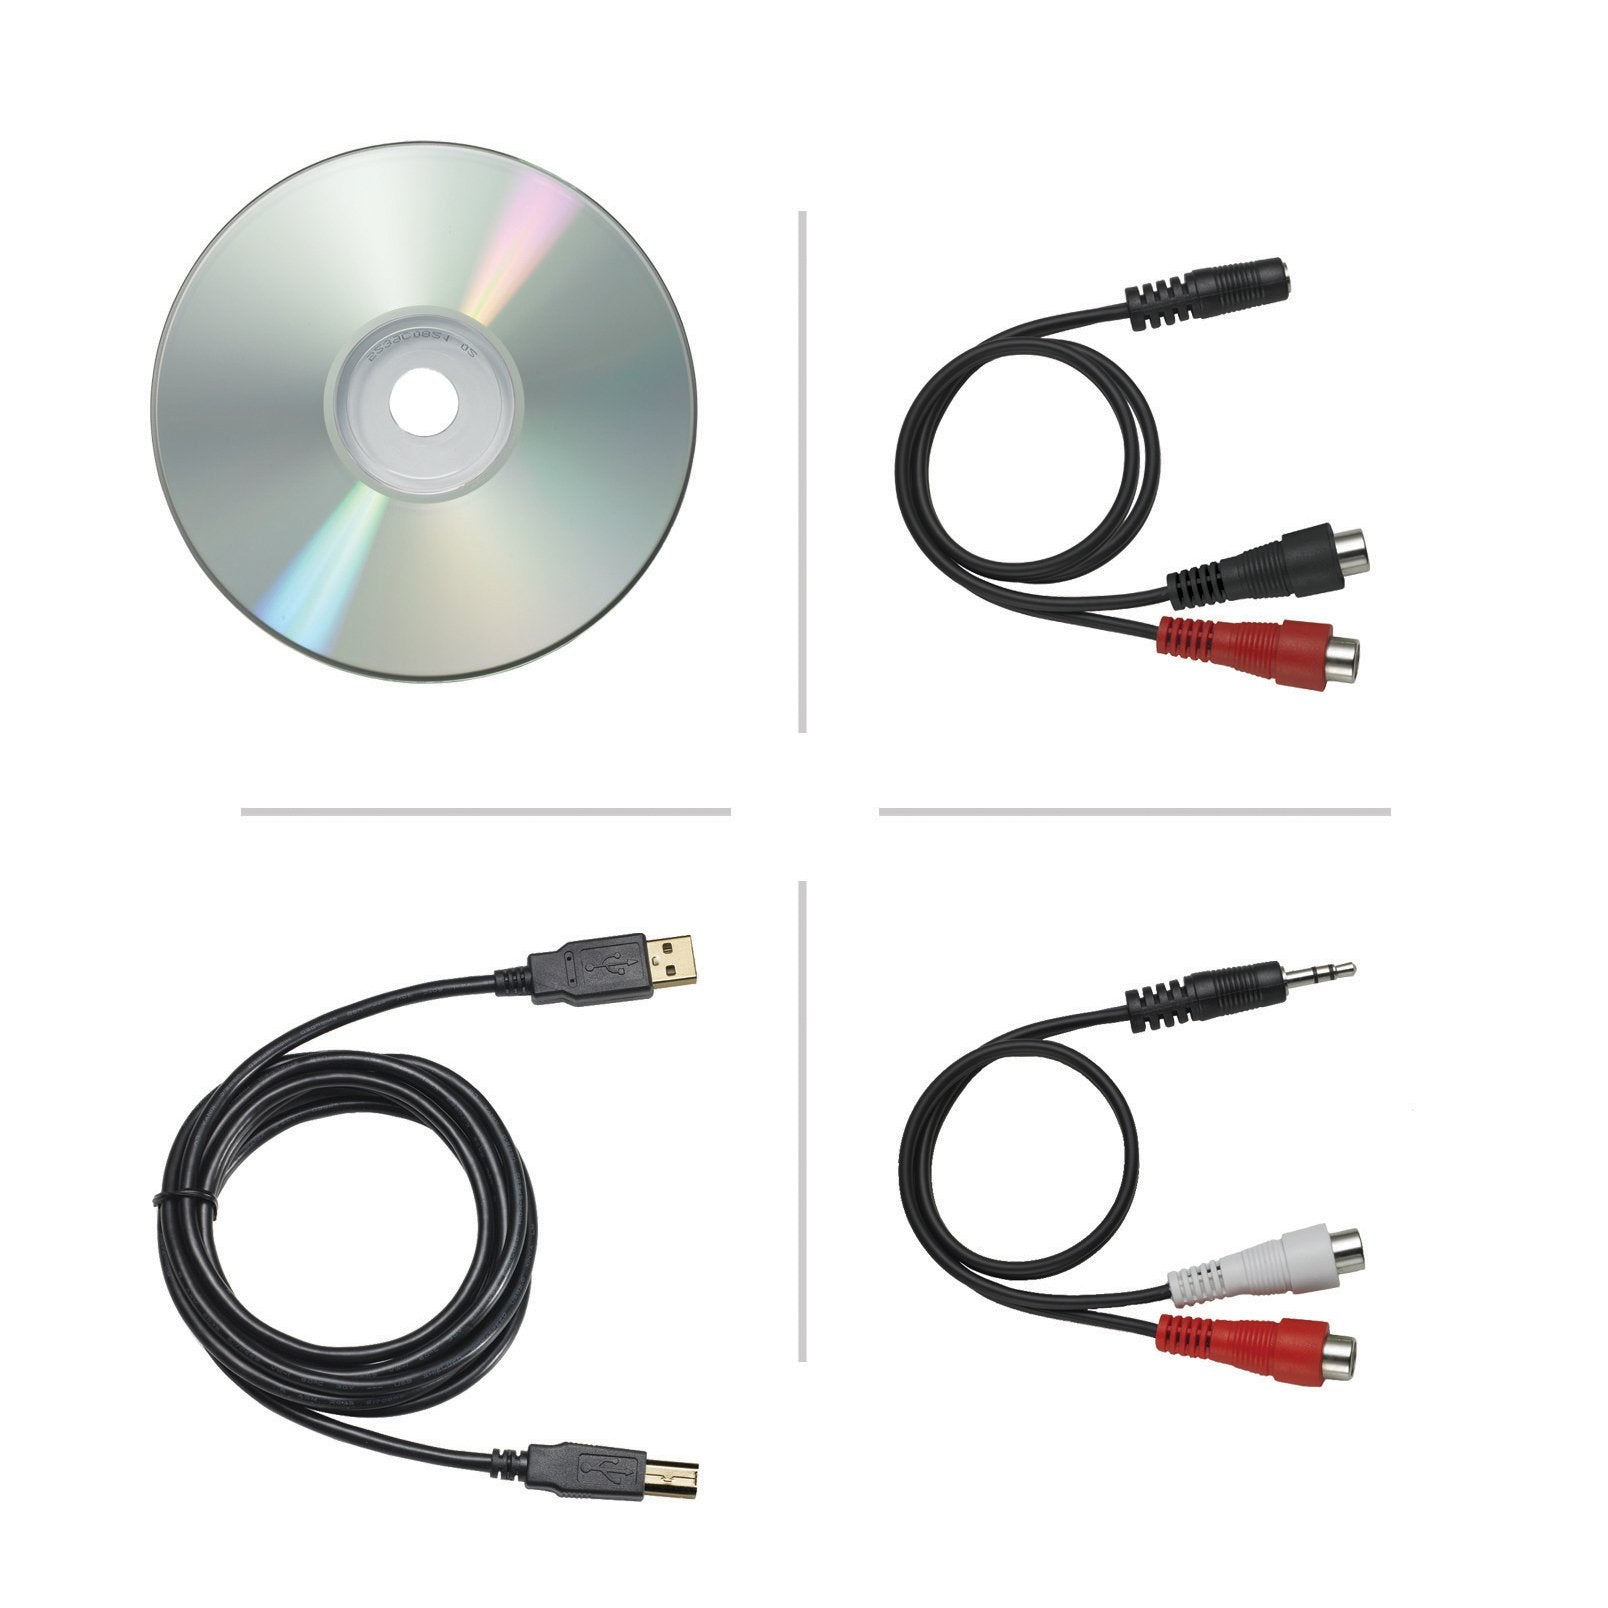  Audio-Technica AT-LP120-USB Direct-Drive Professional